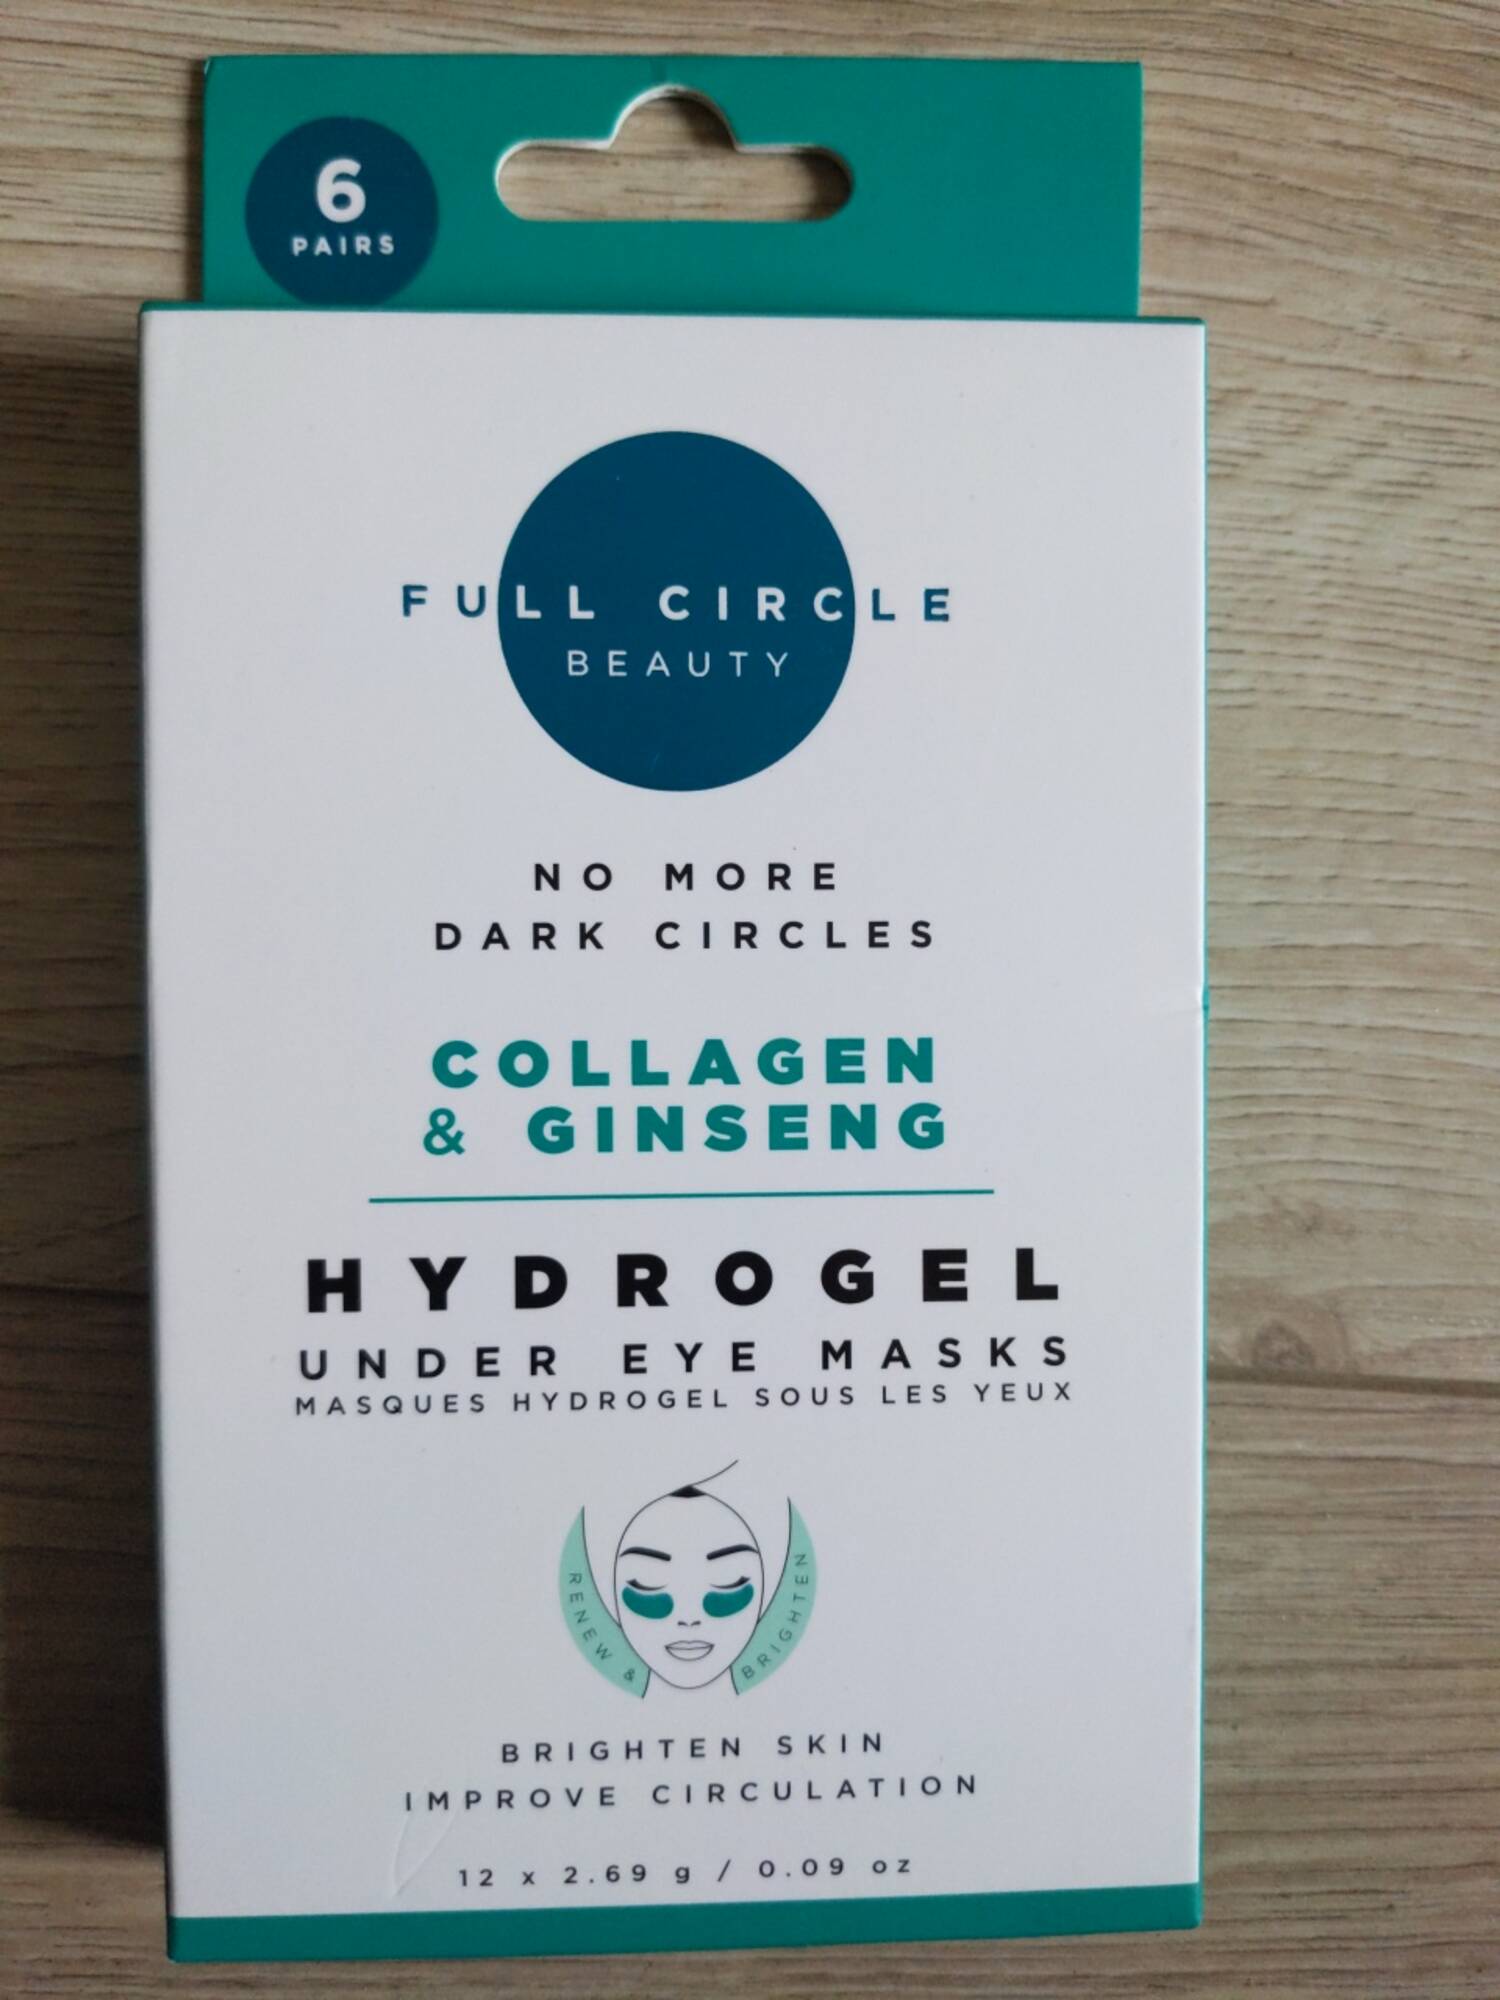 FULL CIRCULE BEAUTY - Hydrogel - Under eye masks